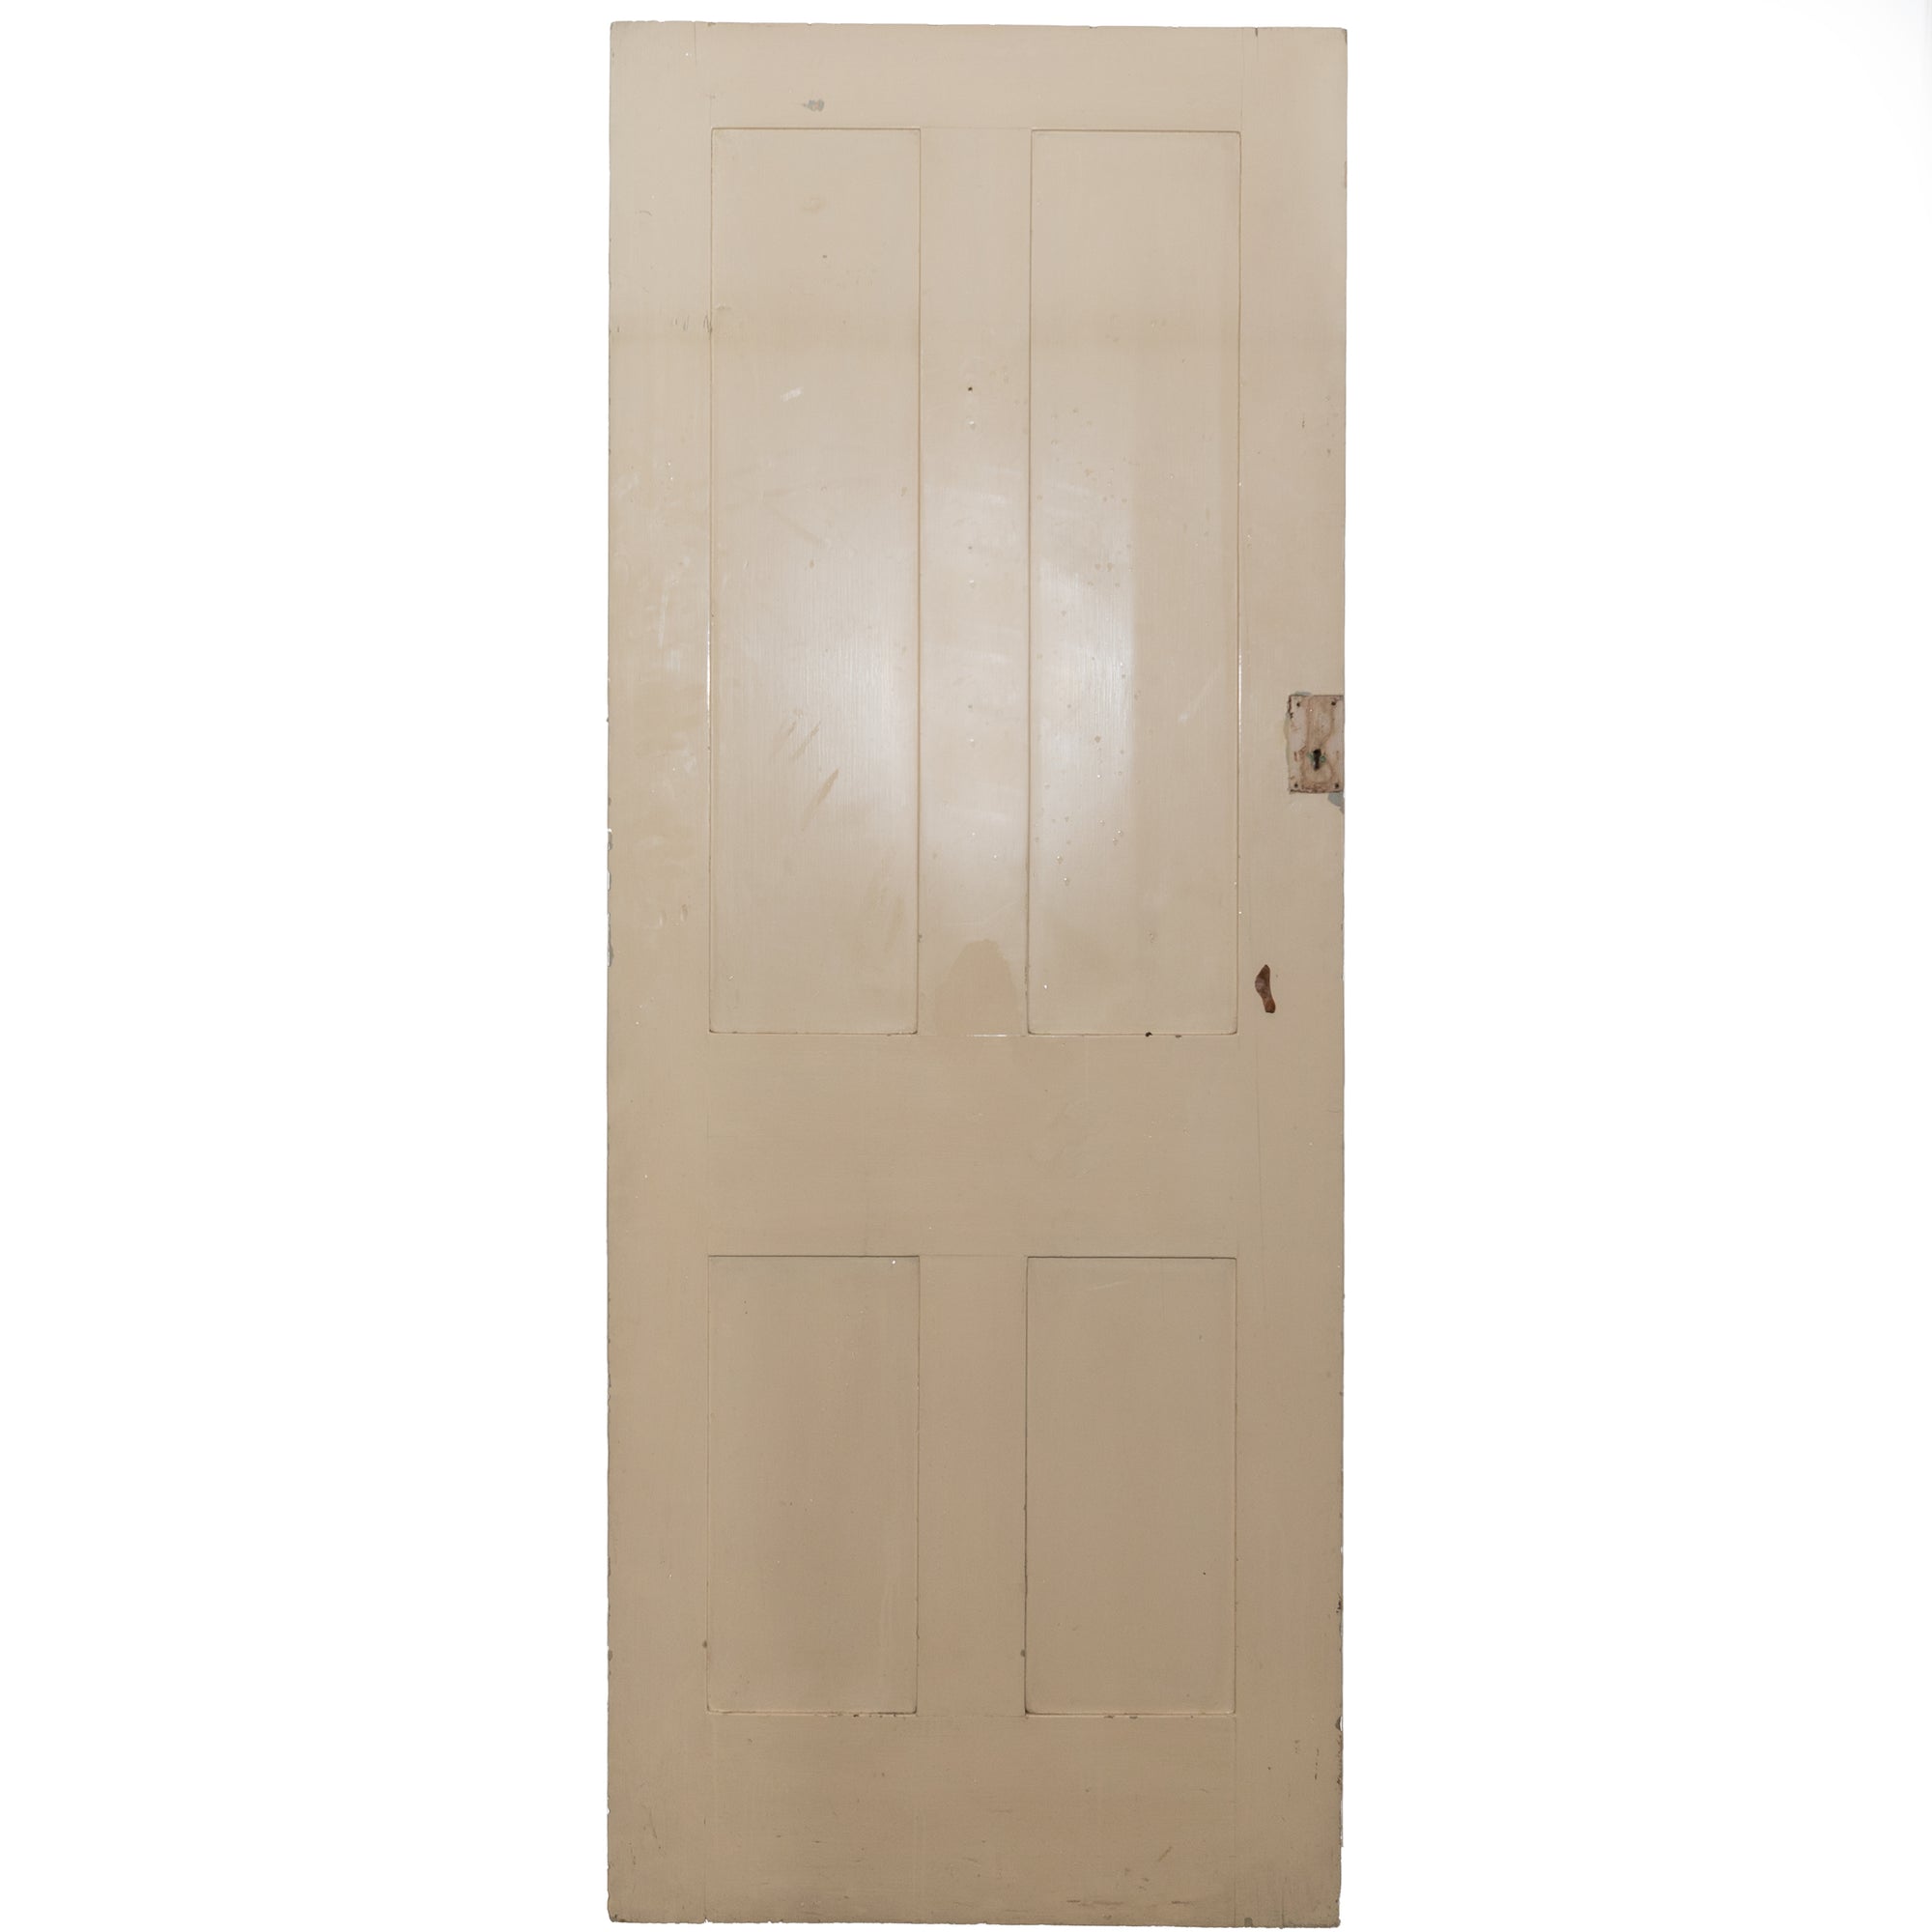 Victorian 4 Panel Door - 193cm x 73cm | The Architectural Forum